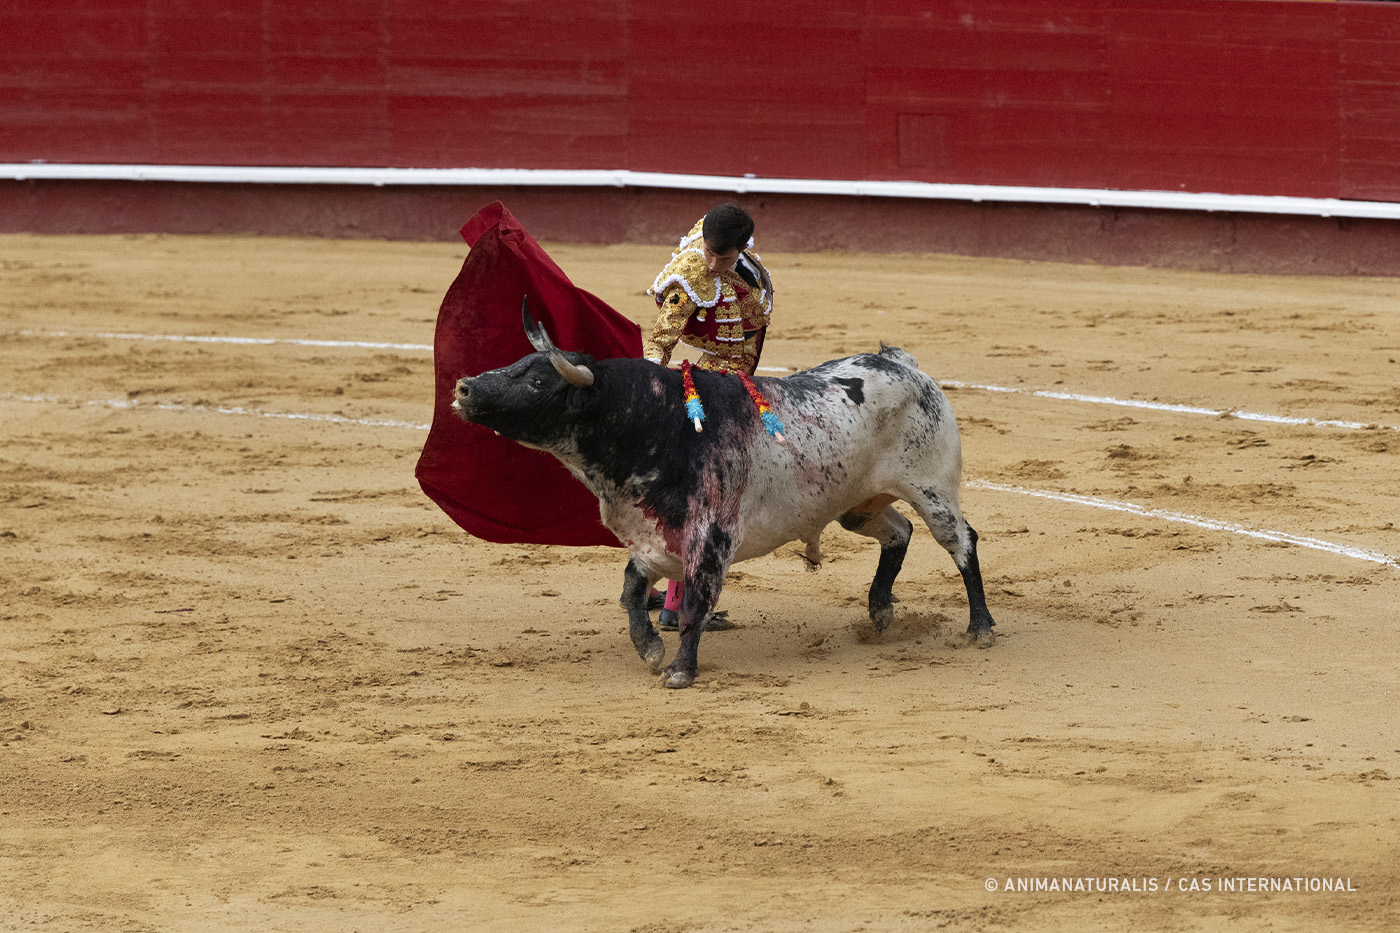 Colombia bans bullfighting